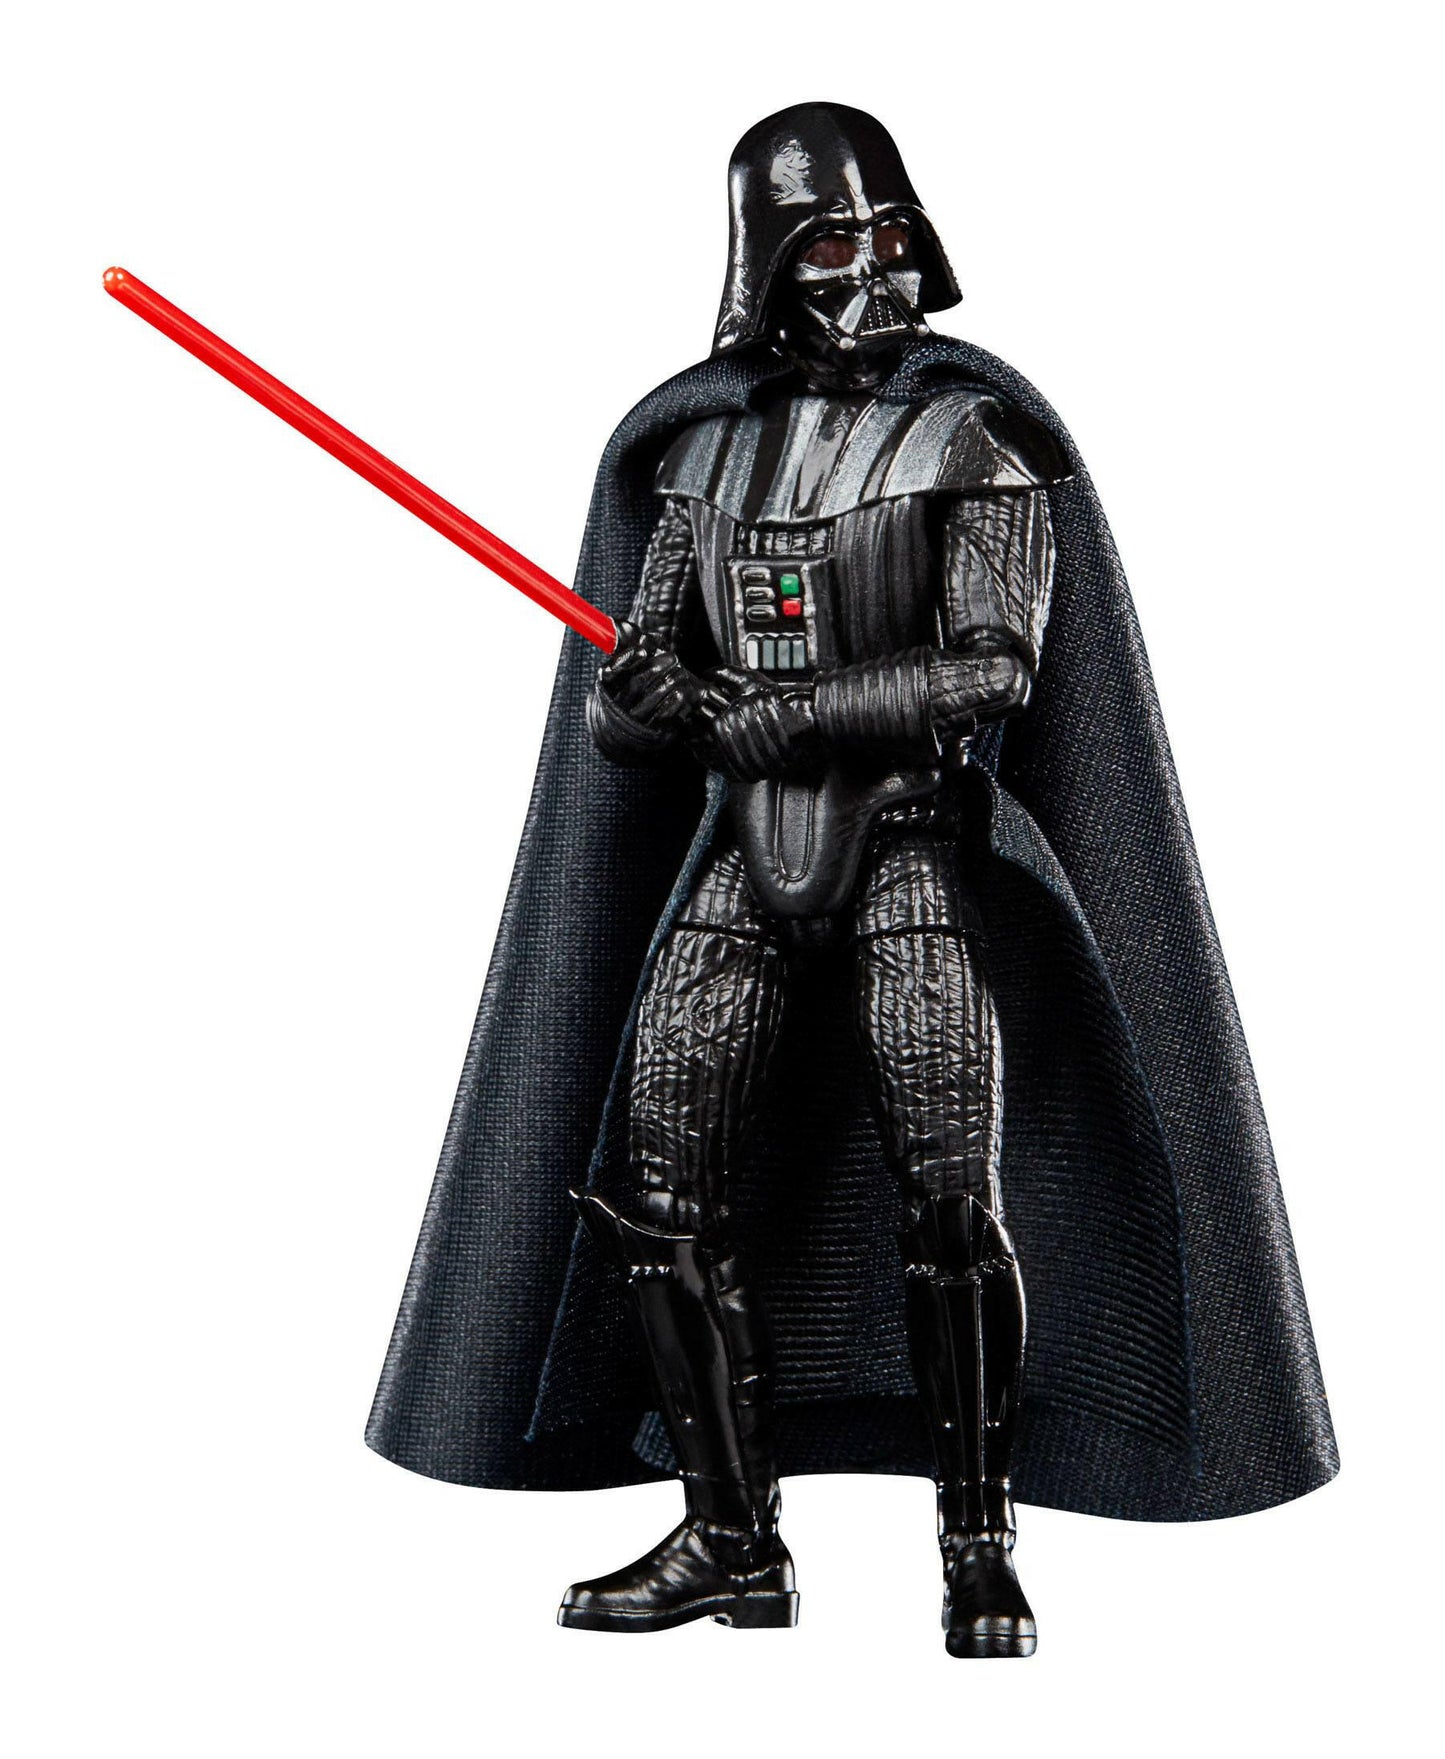 Star Wars Vintage Collection Obi-Wan Kenobi: Darth Vader (The Dark Times) 10cm Hasbro